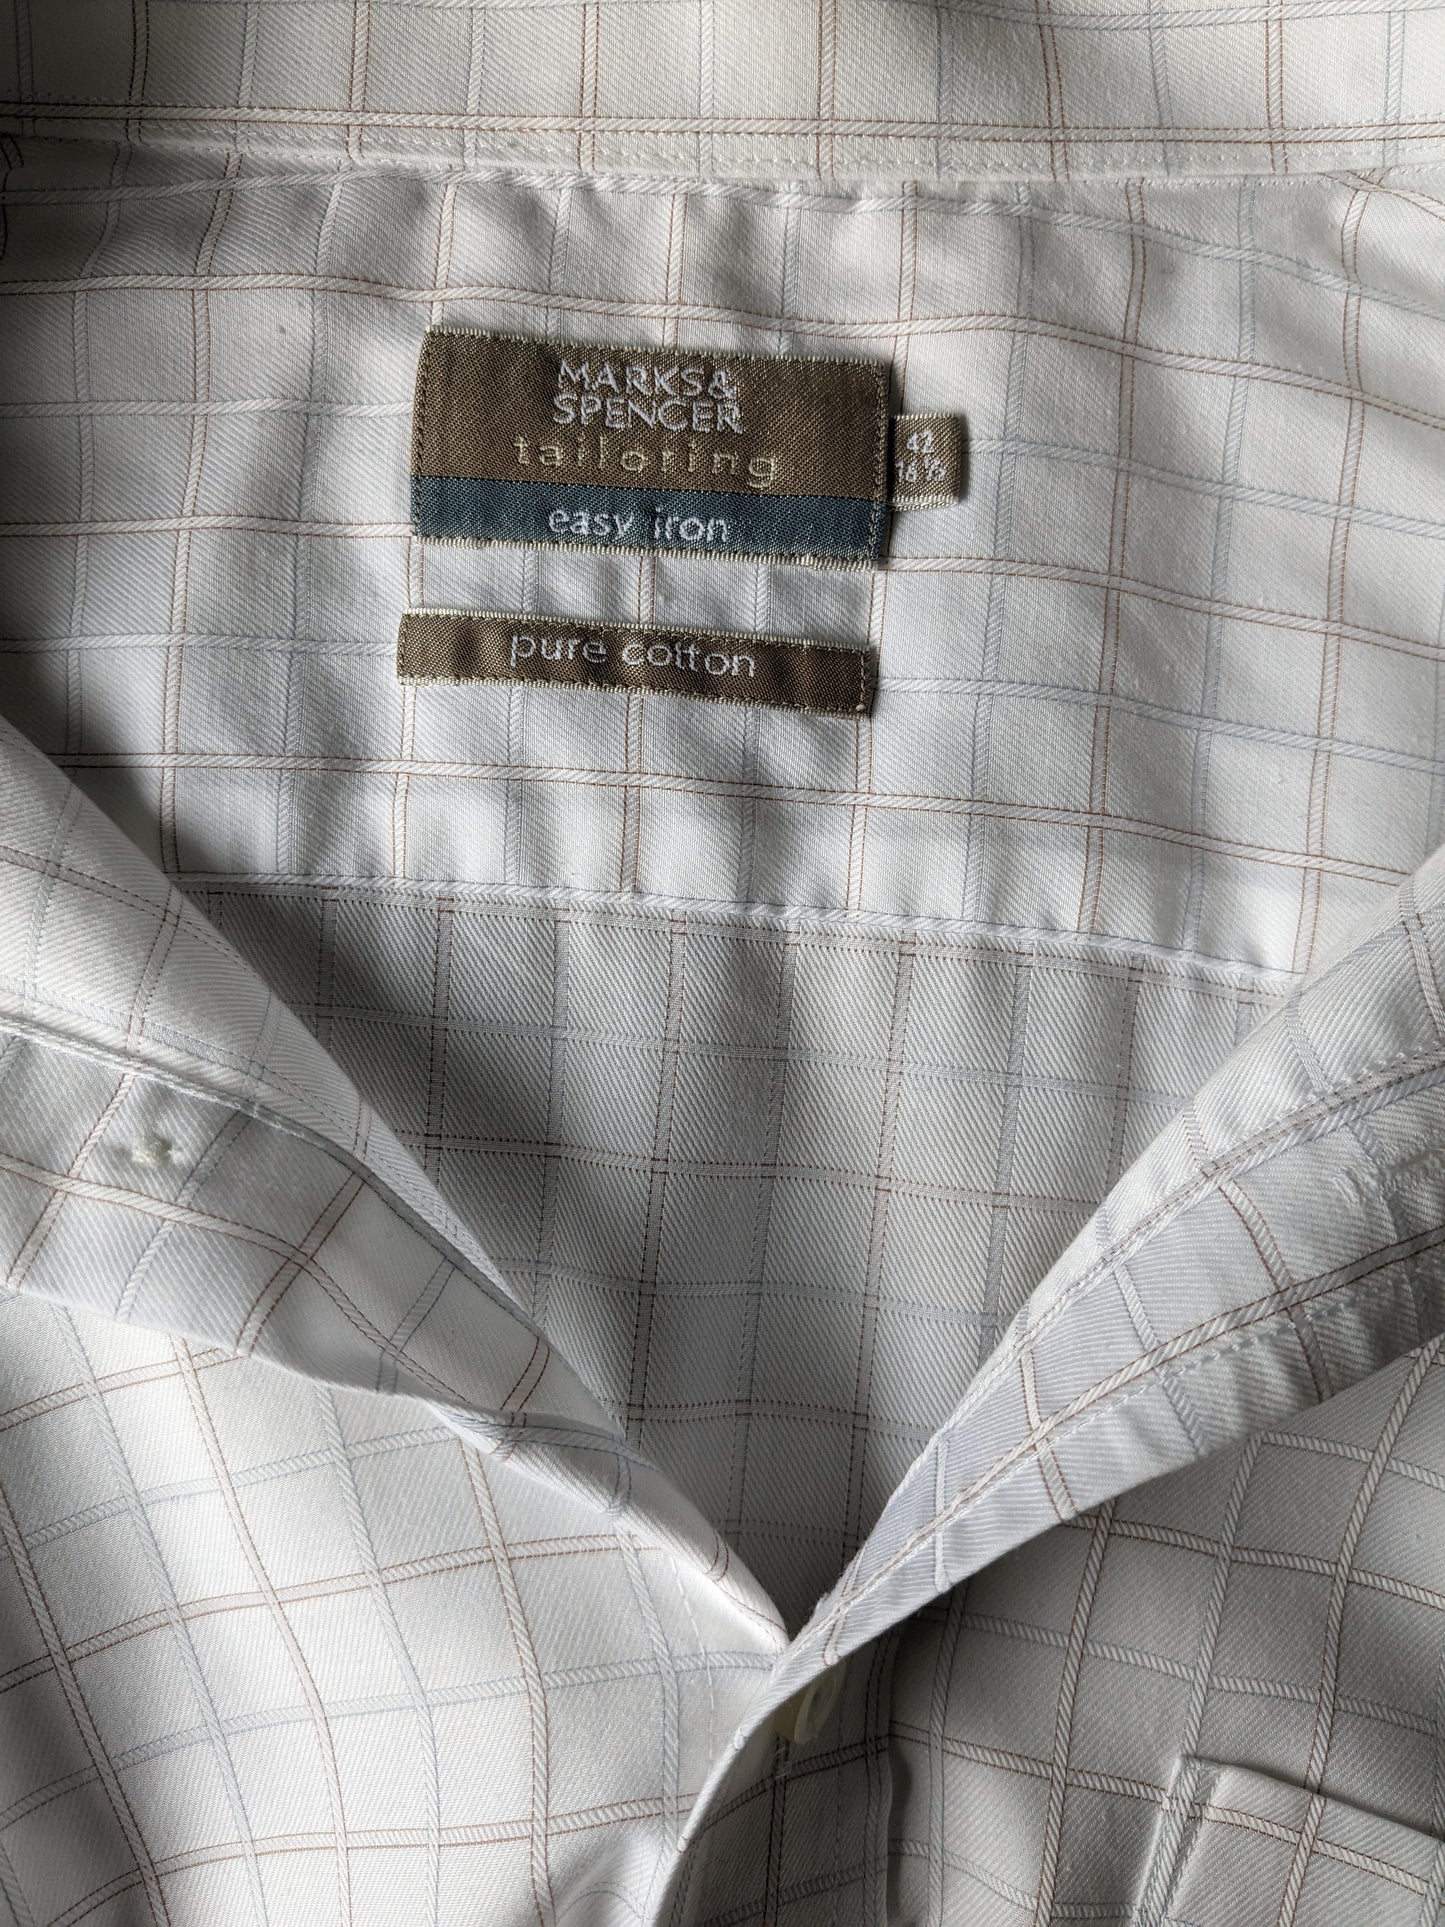 Marks & Spencer tailoring shirt short sleeve. White blue brown line. Size 42 / L.